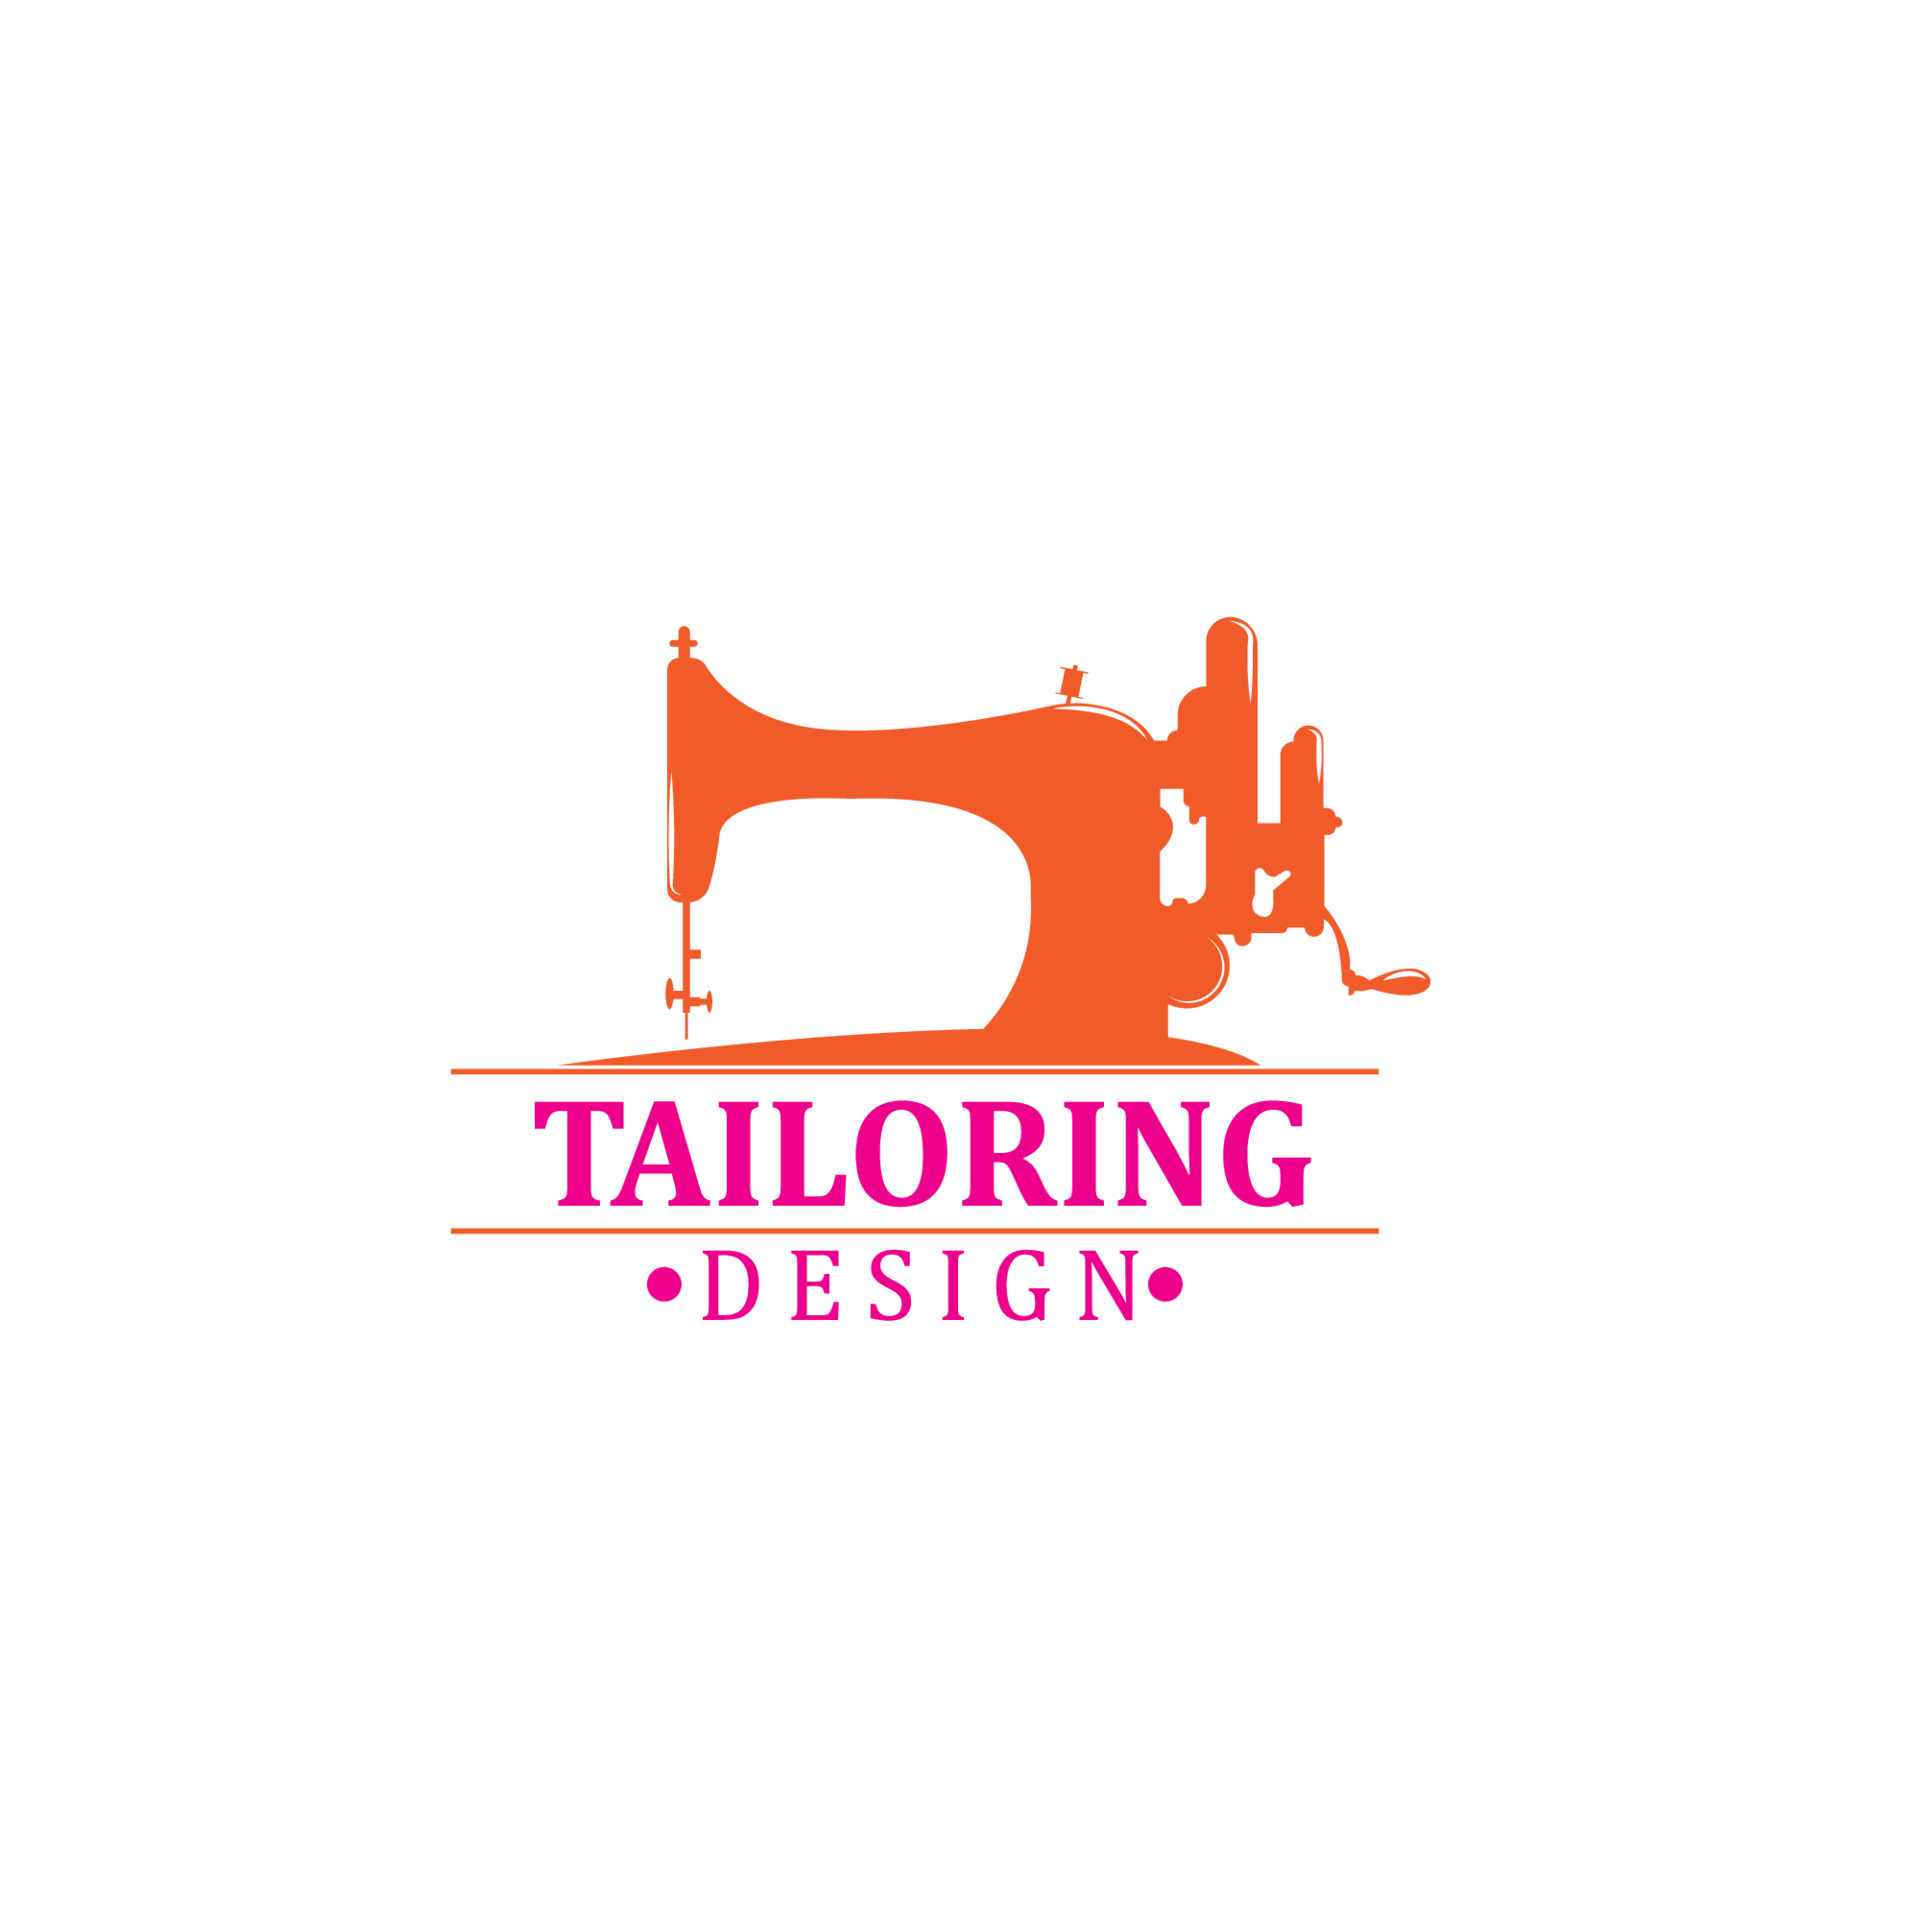 Free Tailor Logo Designs | DesignEvo Logo Maker